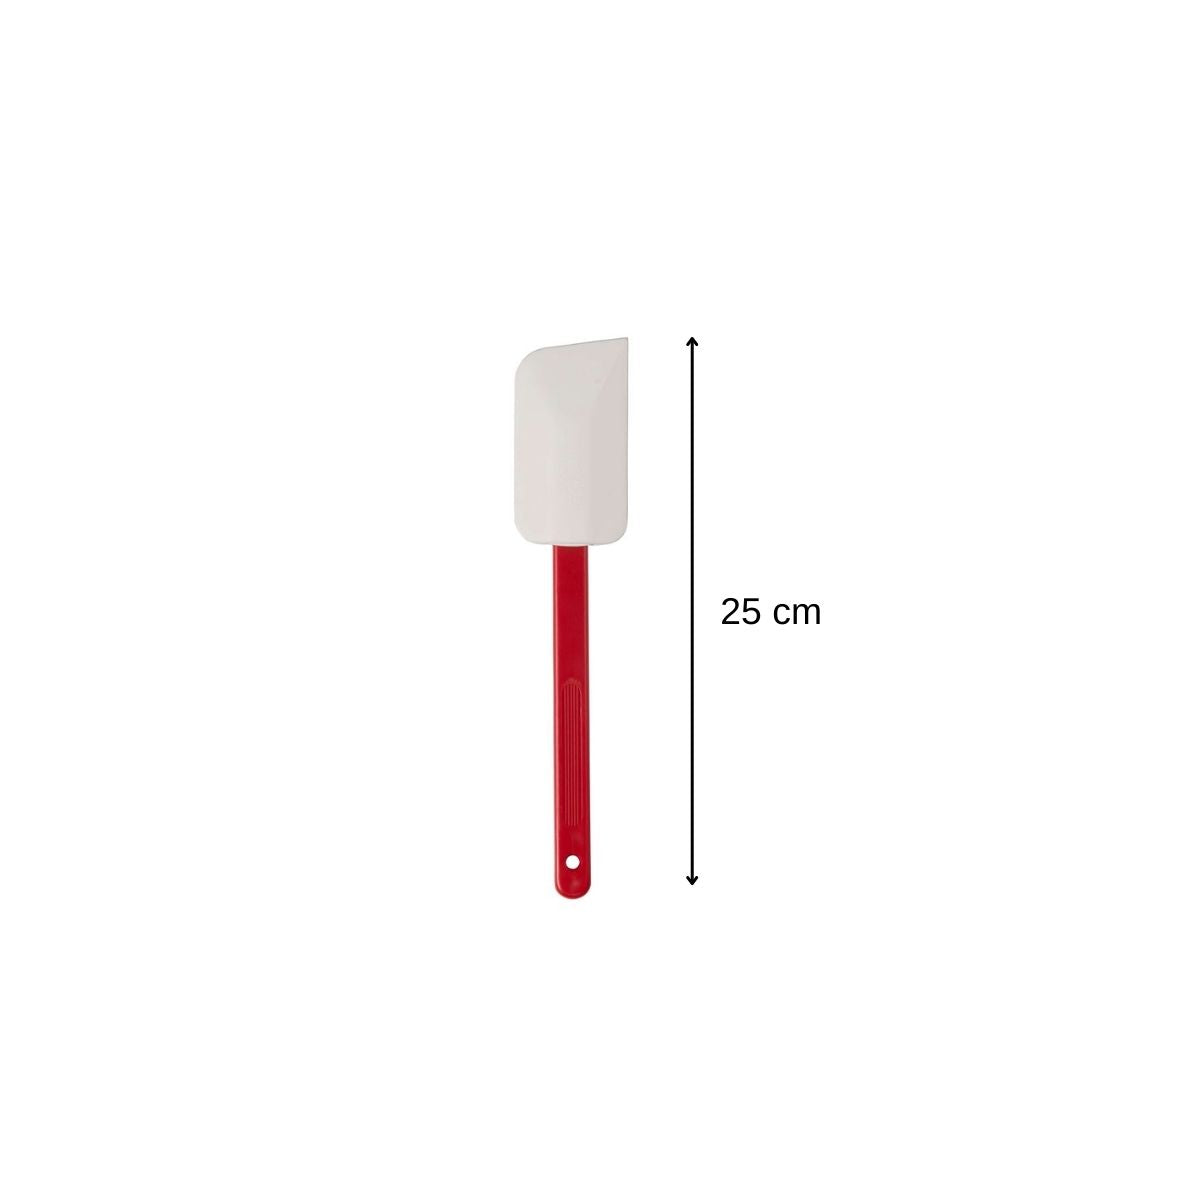 Spatule de pâtisserie rouge Maryse 25 cm Fackelmann